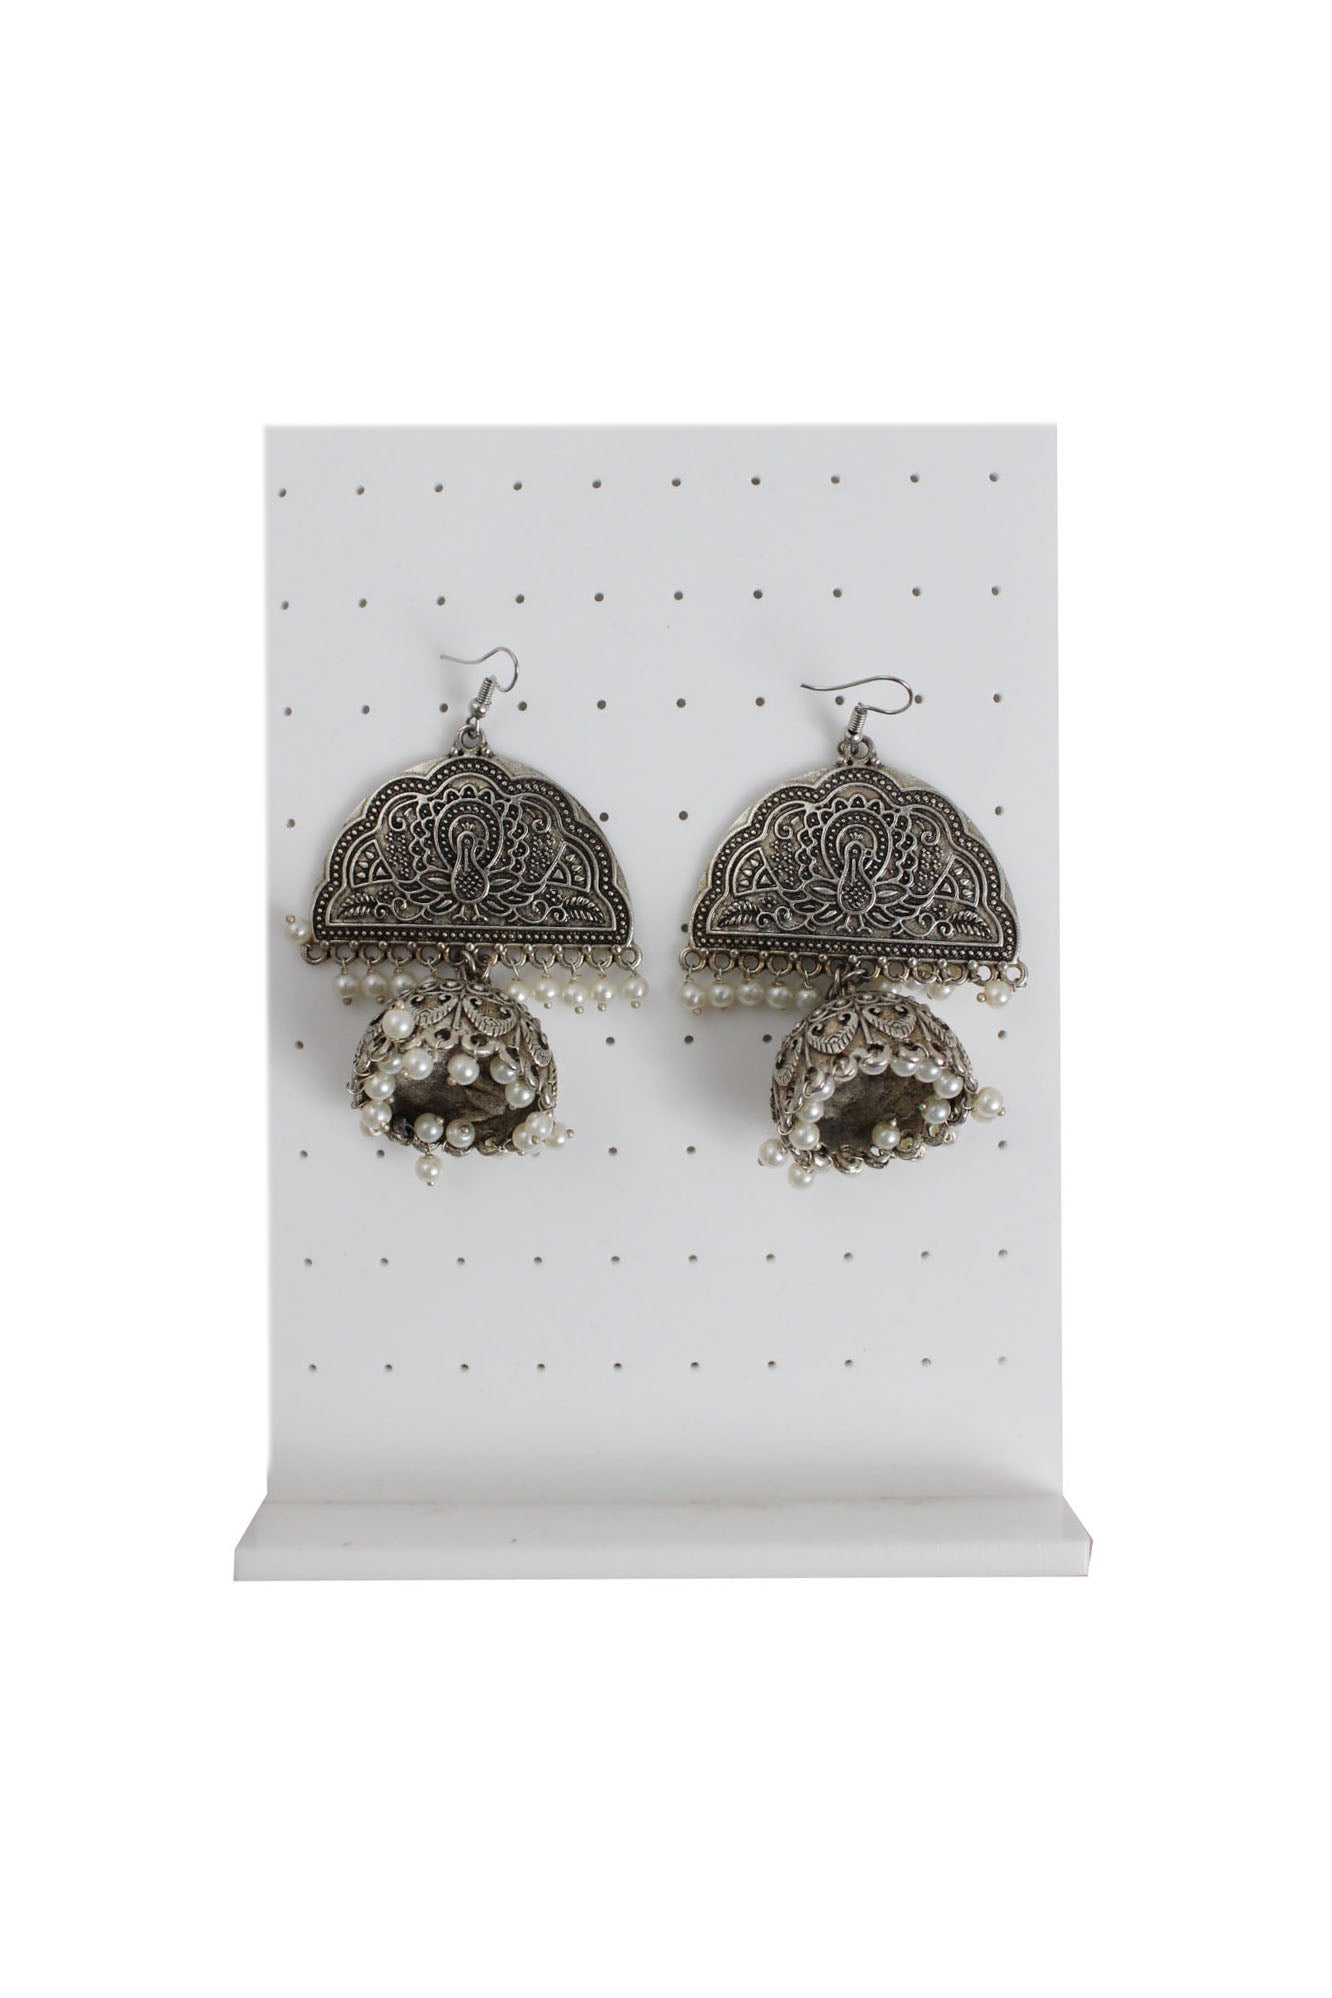 description: unlabeled dark-silver metal peafowl earrings. features embossed detailing, pearl tassel throughout, and hook closure. 